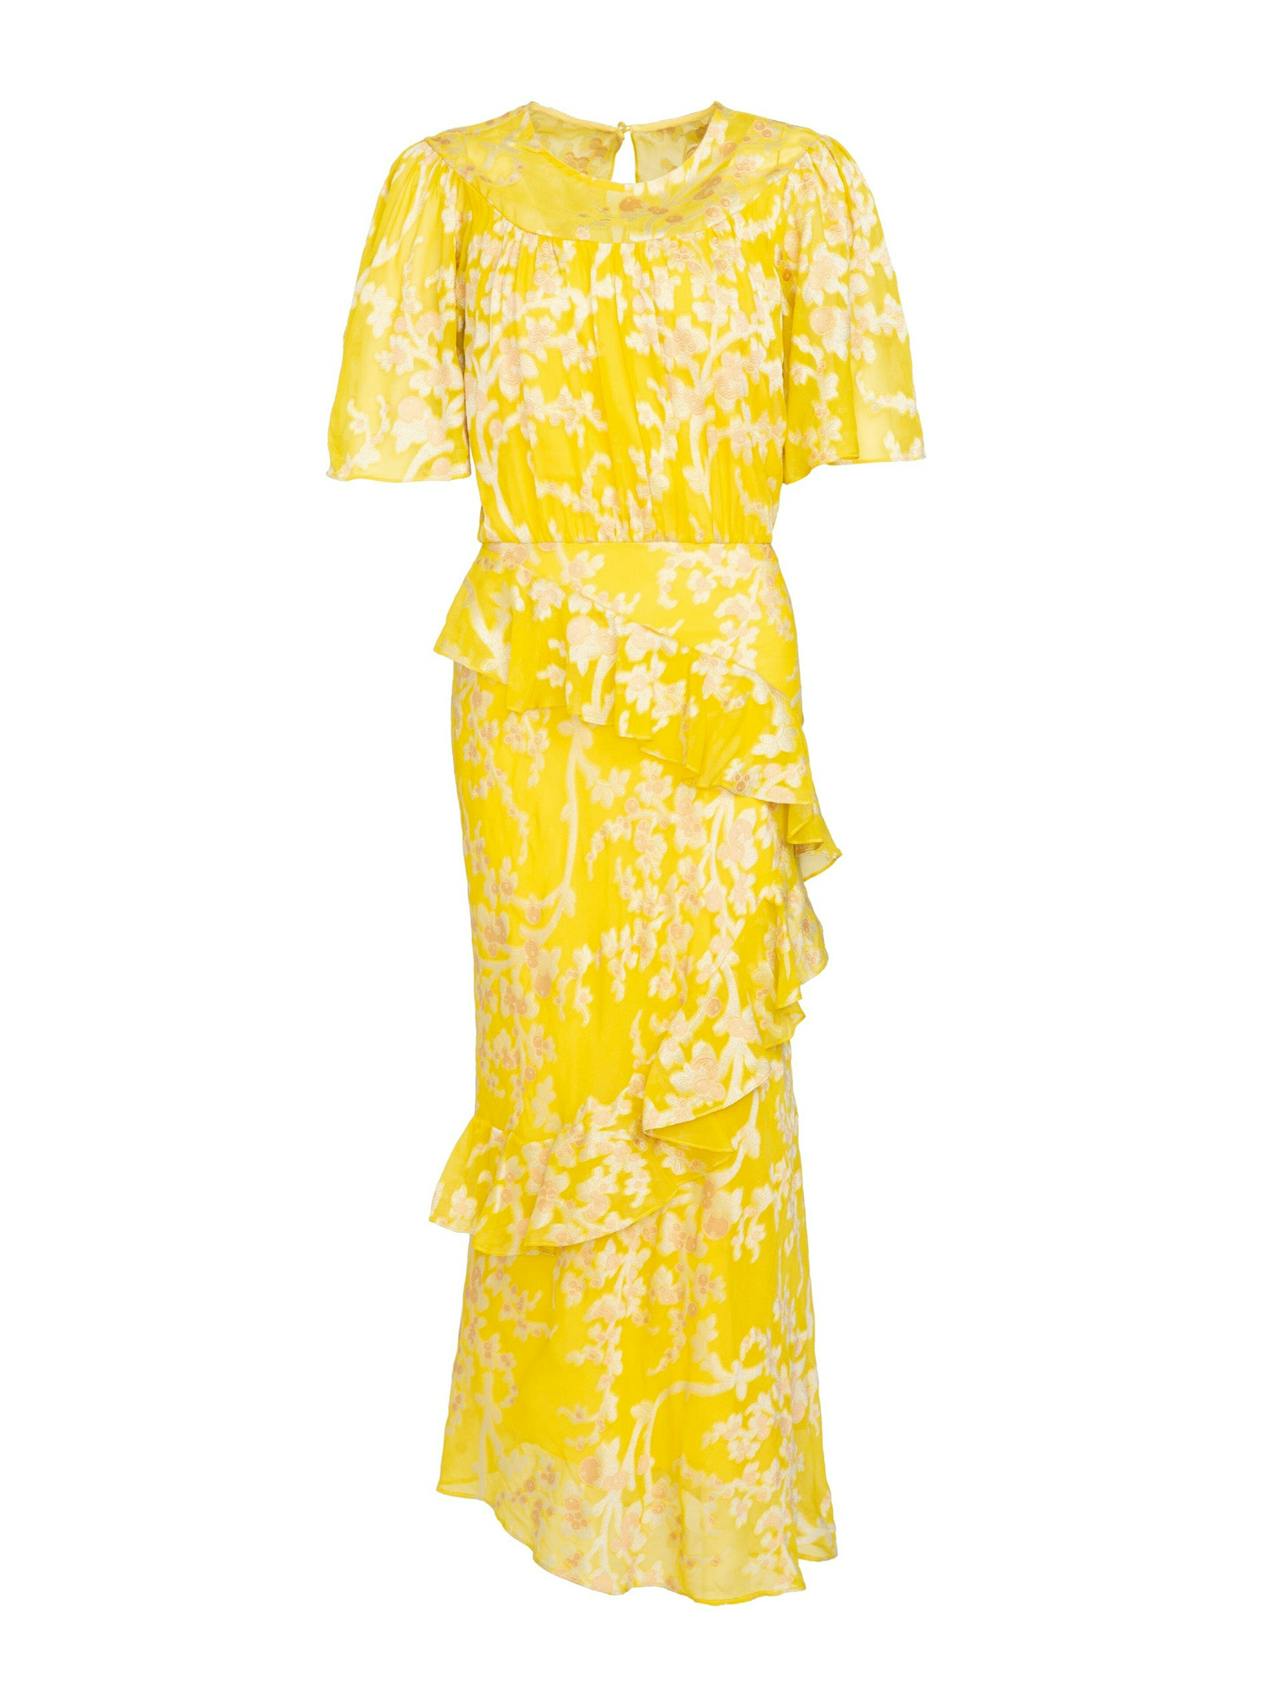 Vida B dress in bright lemon